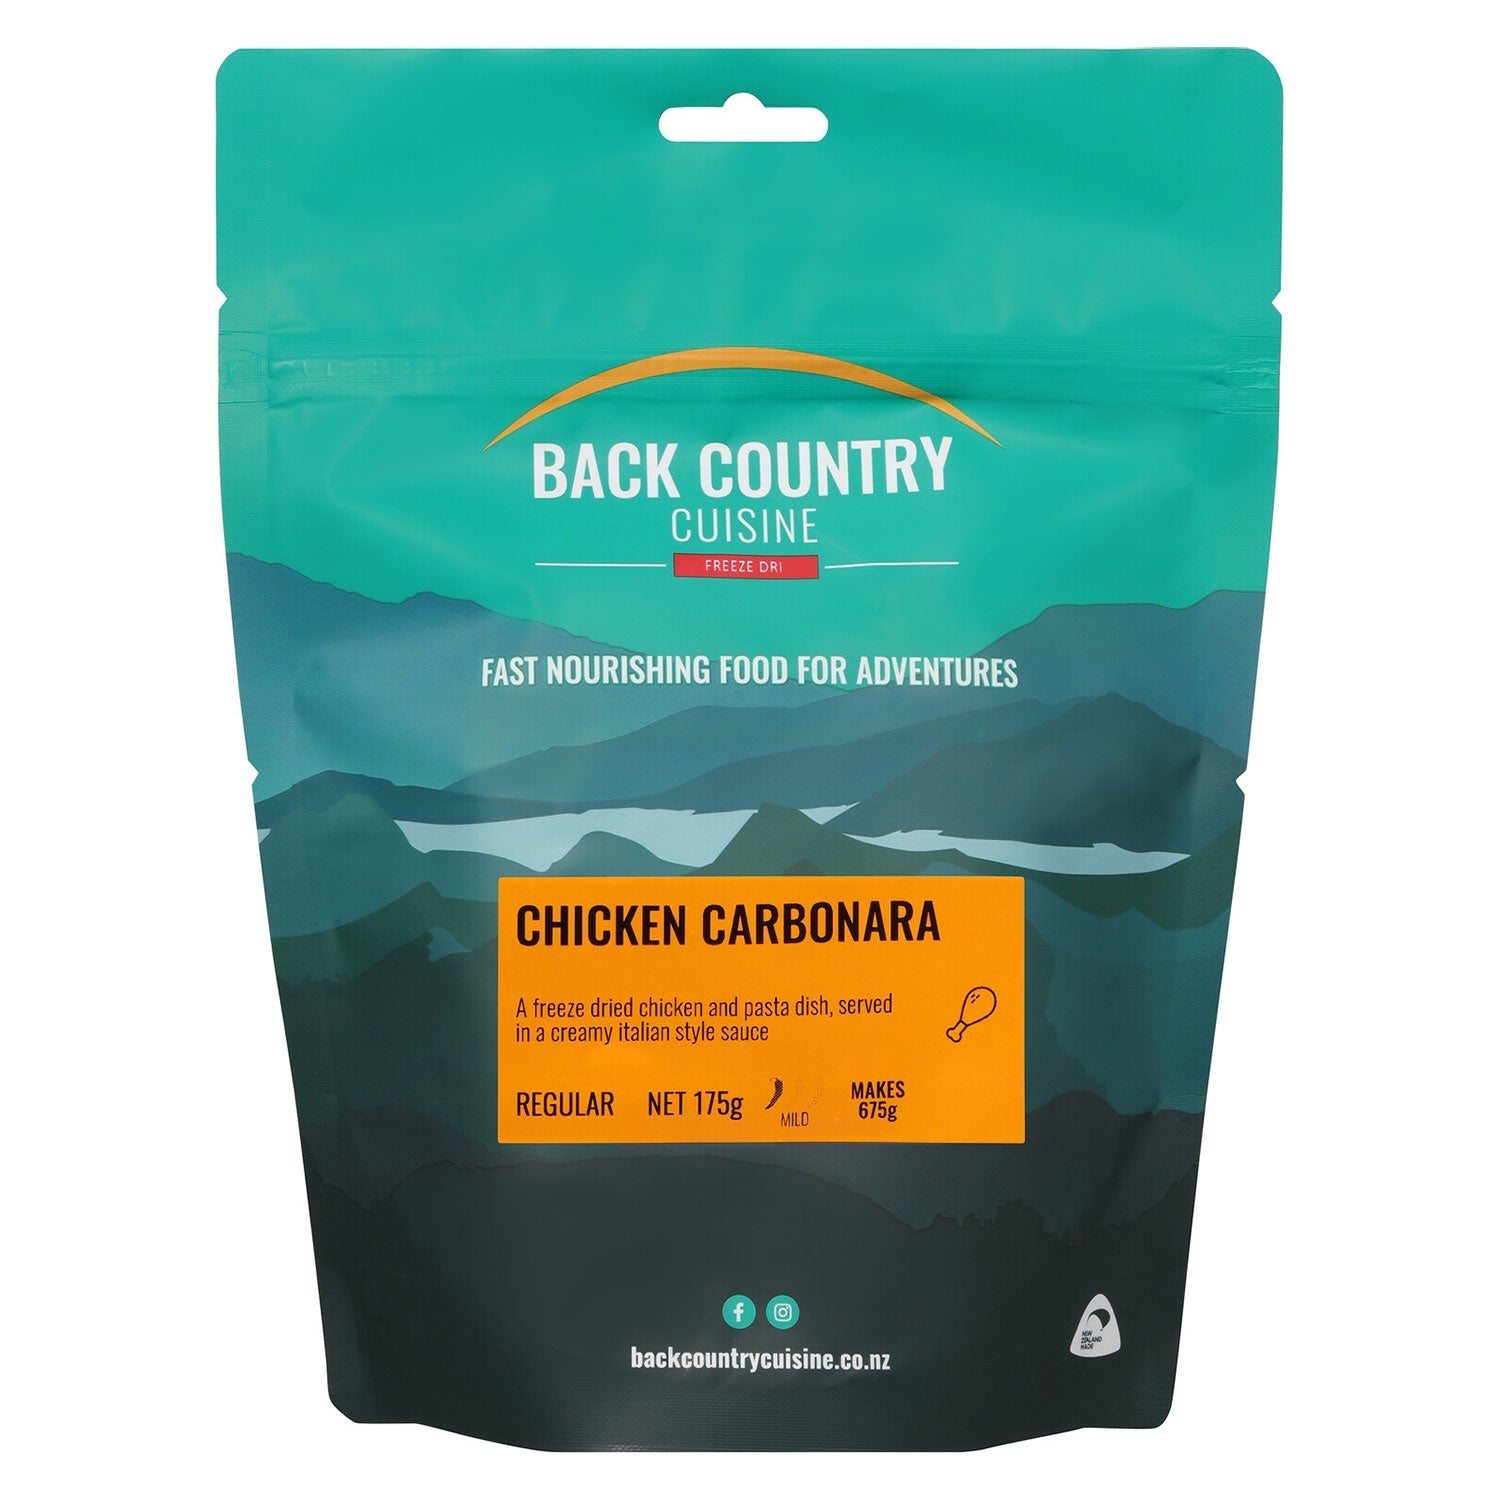 Chicken Carbonara